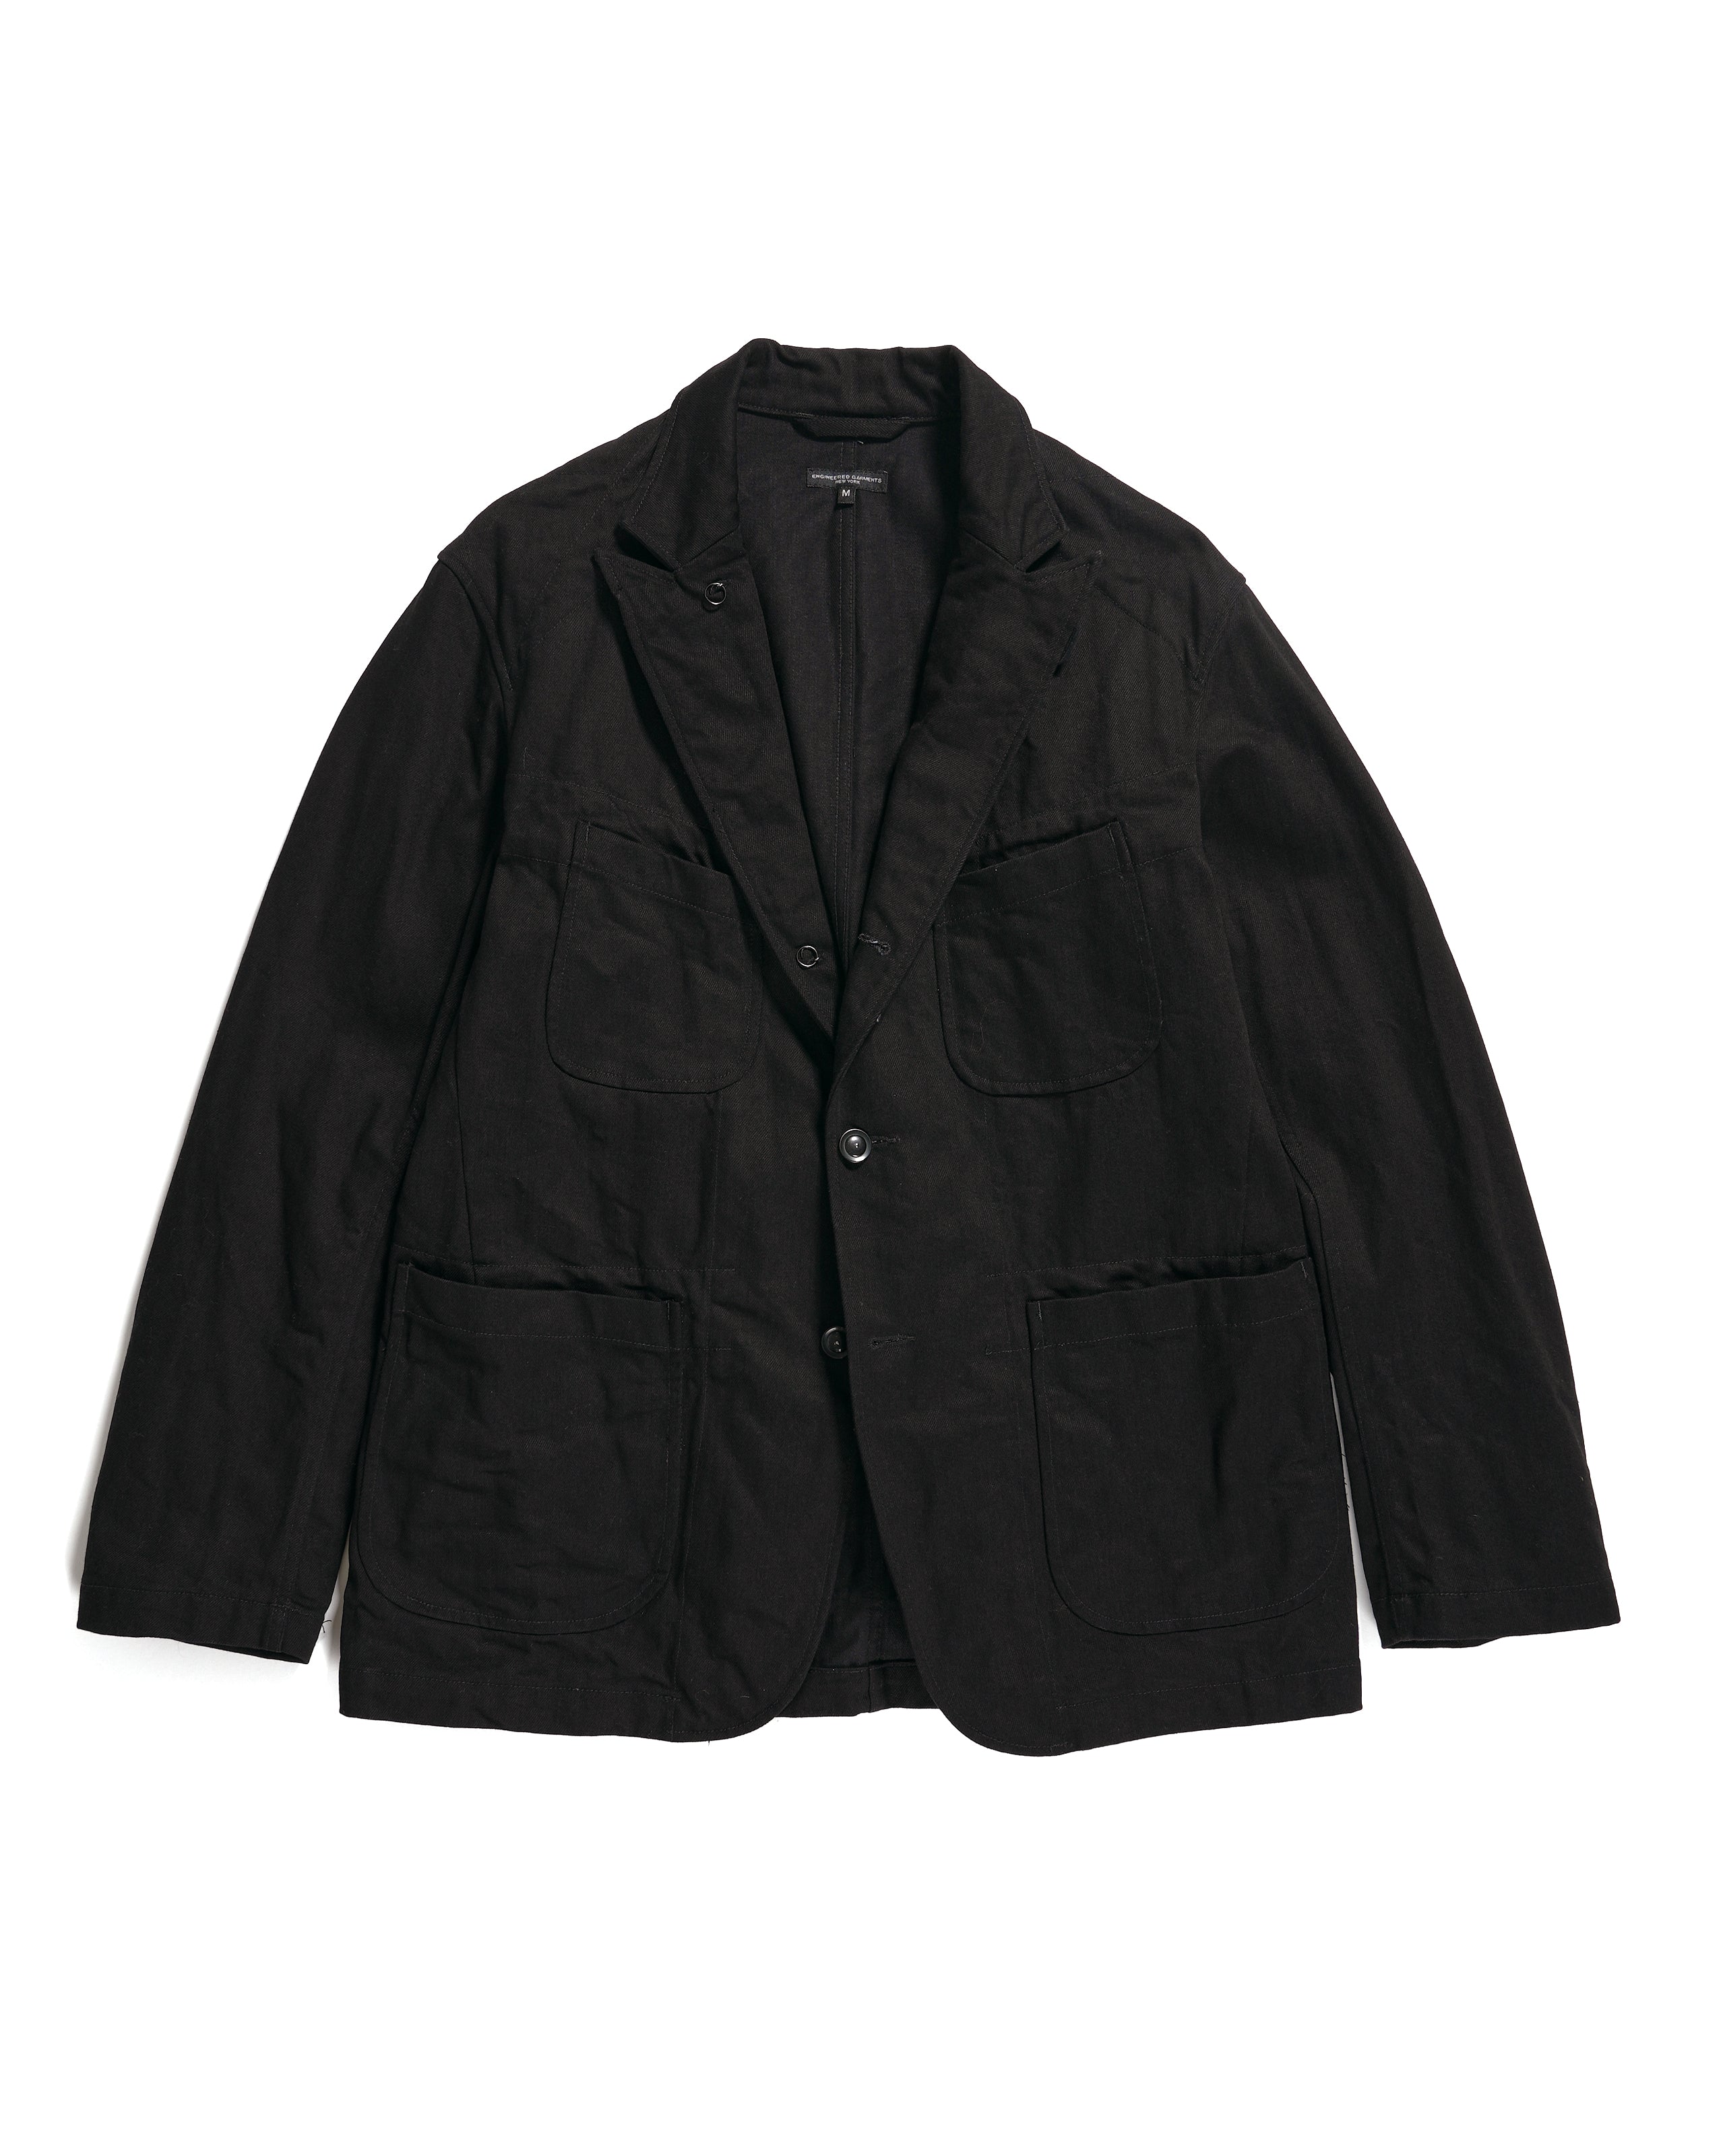 Engineered Garments Bedford Jacket - Black Cotton Bull Denim